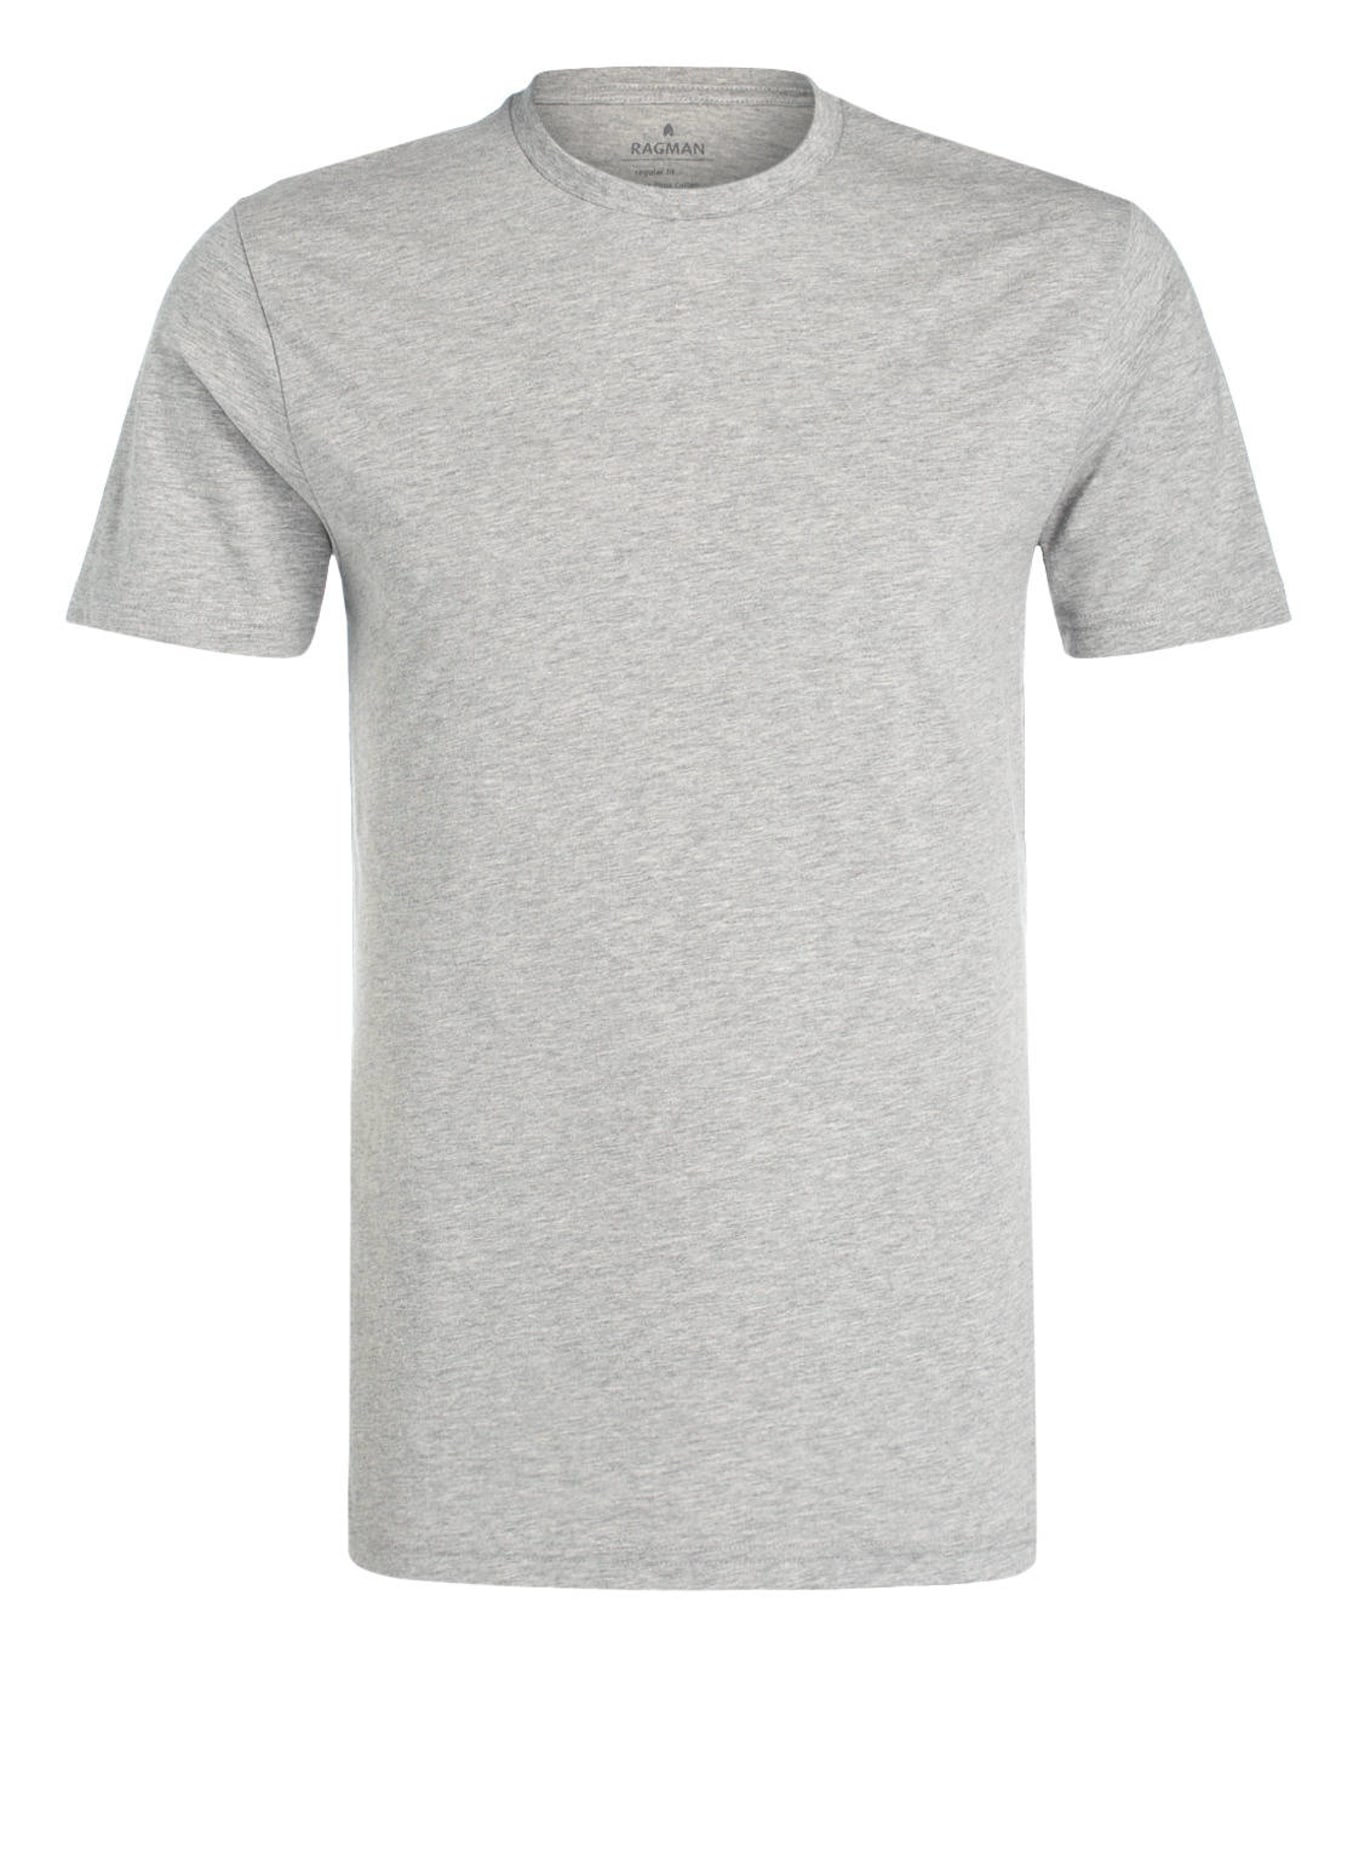 RAGMAN T-Shirt Regular Fit, Farbe: GRAU MELIERT (Bild 1)